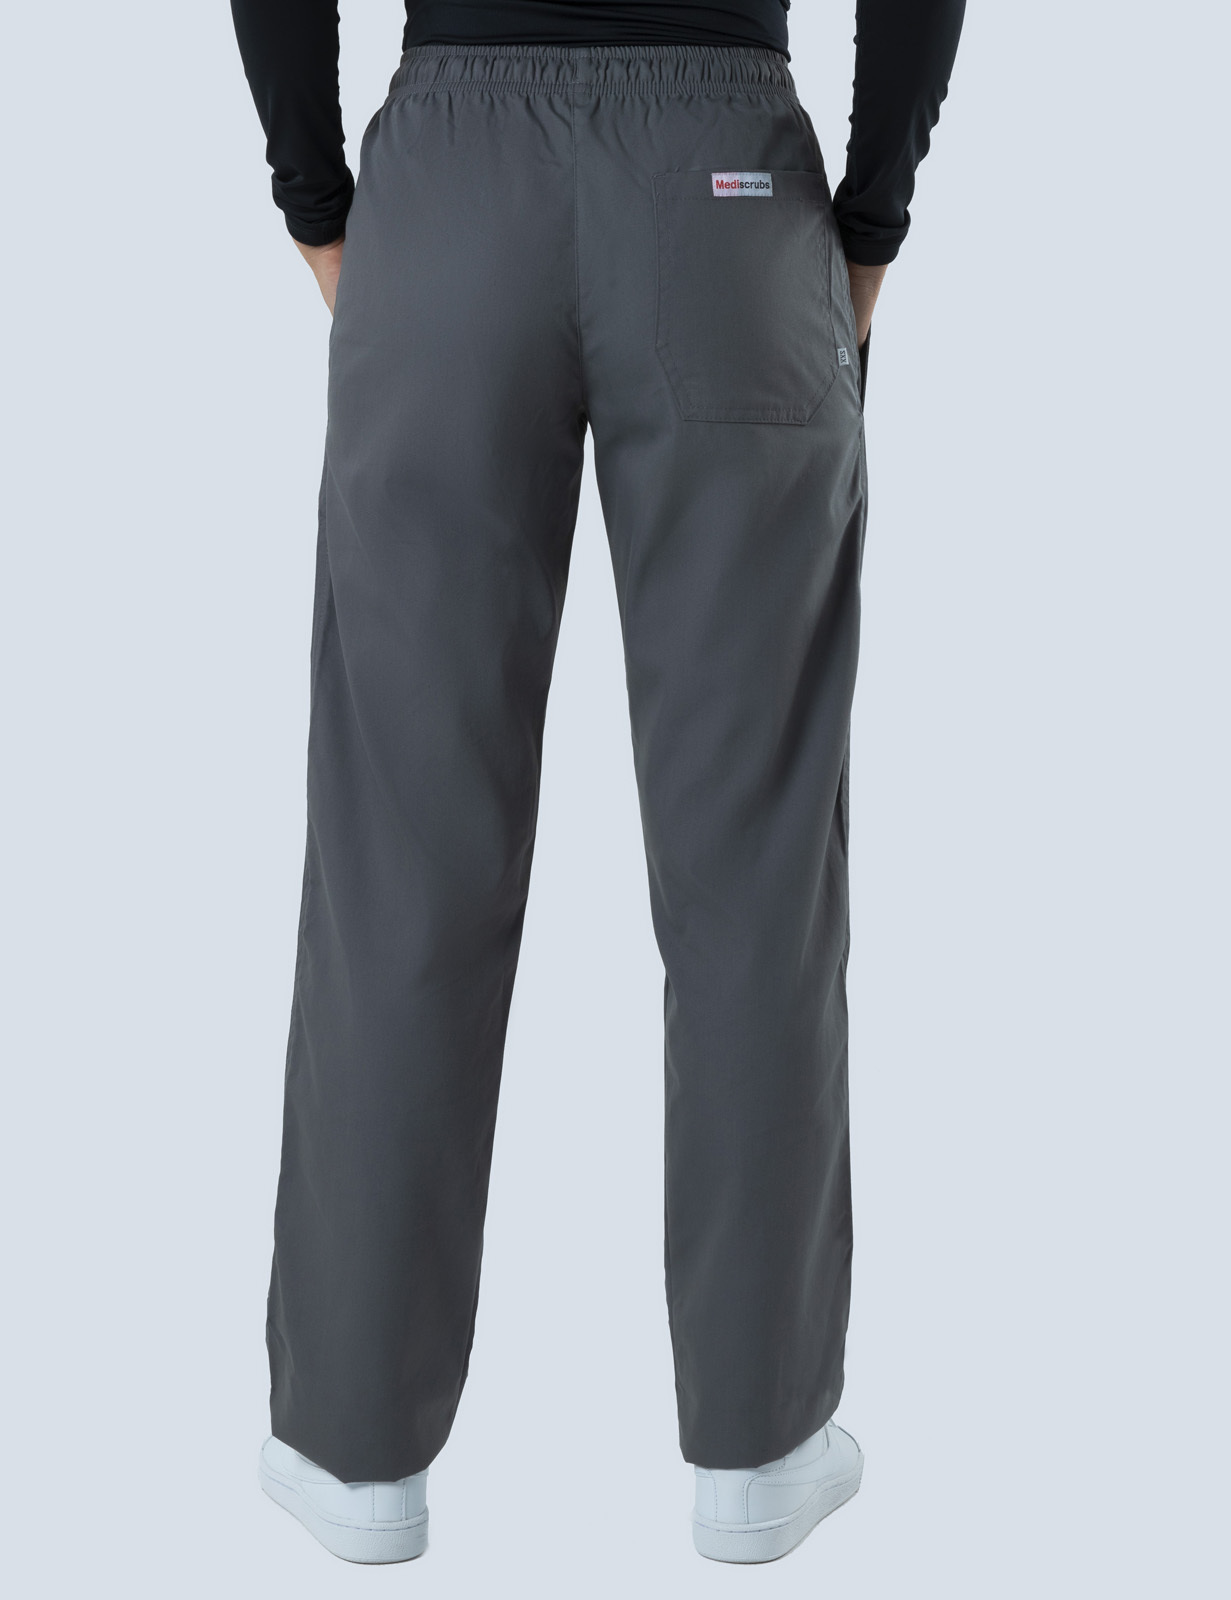 Women's Regular Cut Pants - Steel Grey - 3X Large - Tall - 0